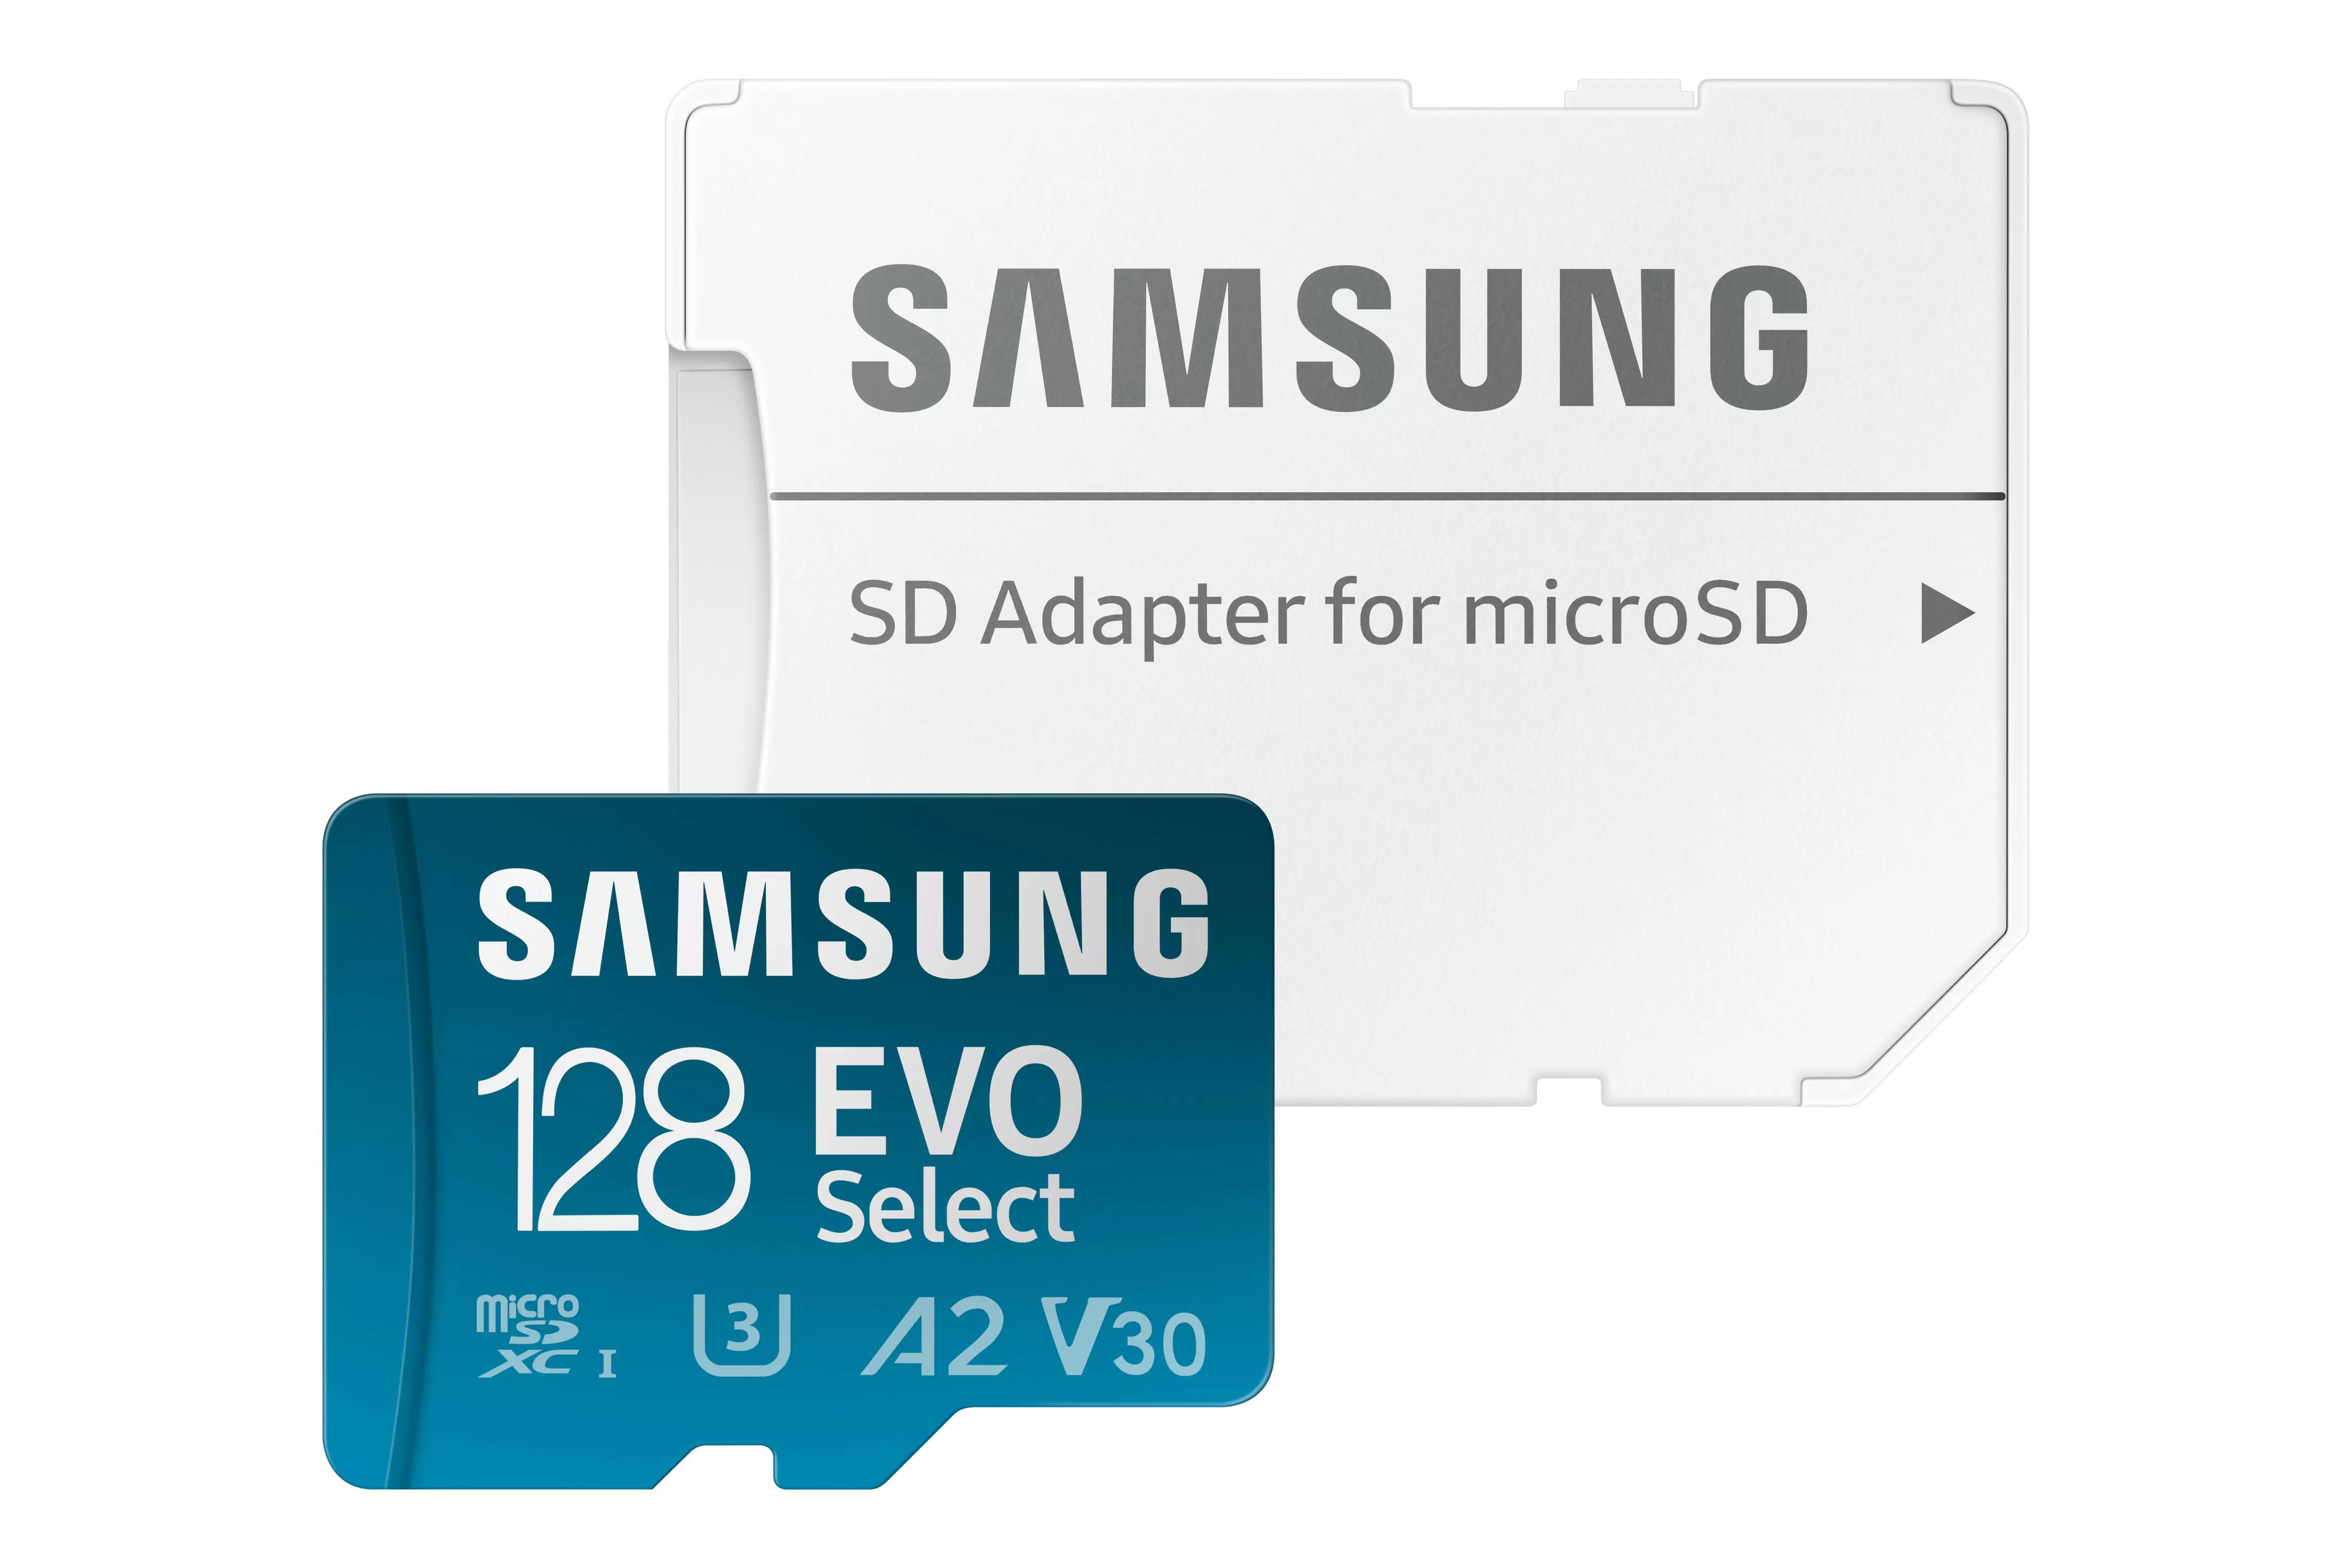 128GB Samsung EVO Select A2 V30 microSDXC Memory Card for $9.99 Shipped